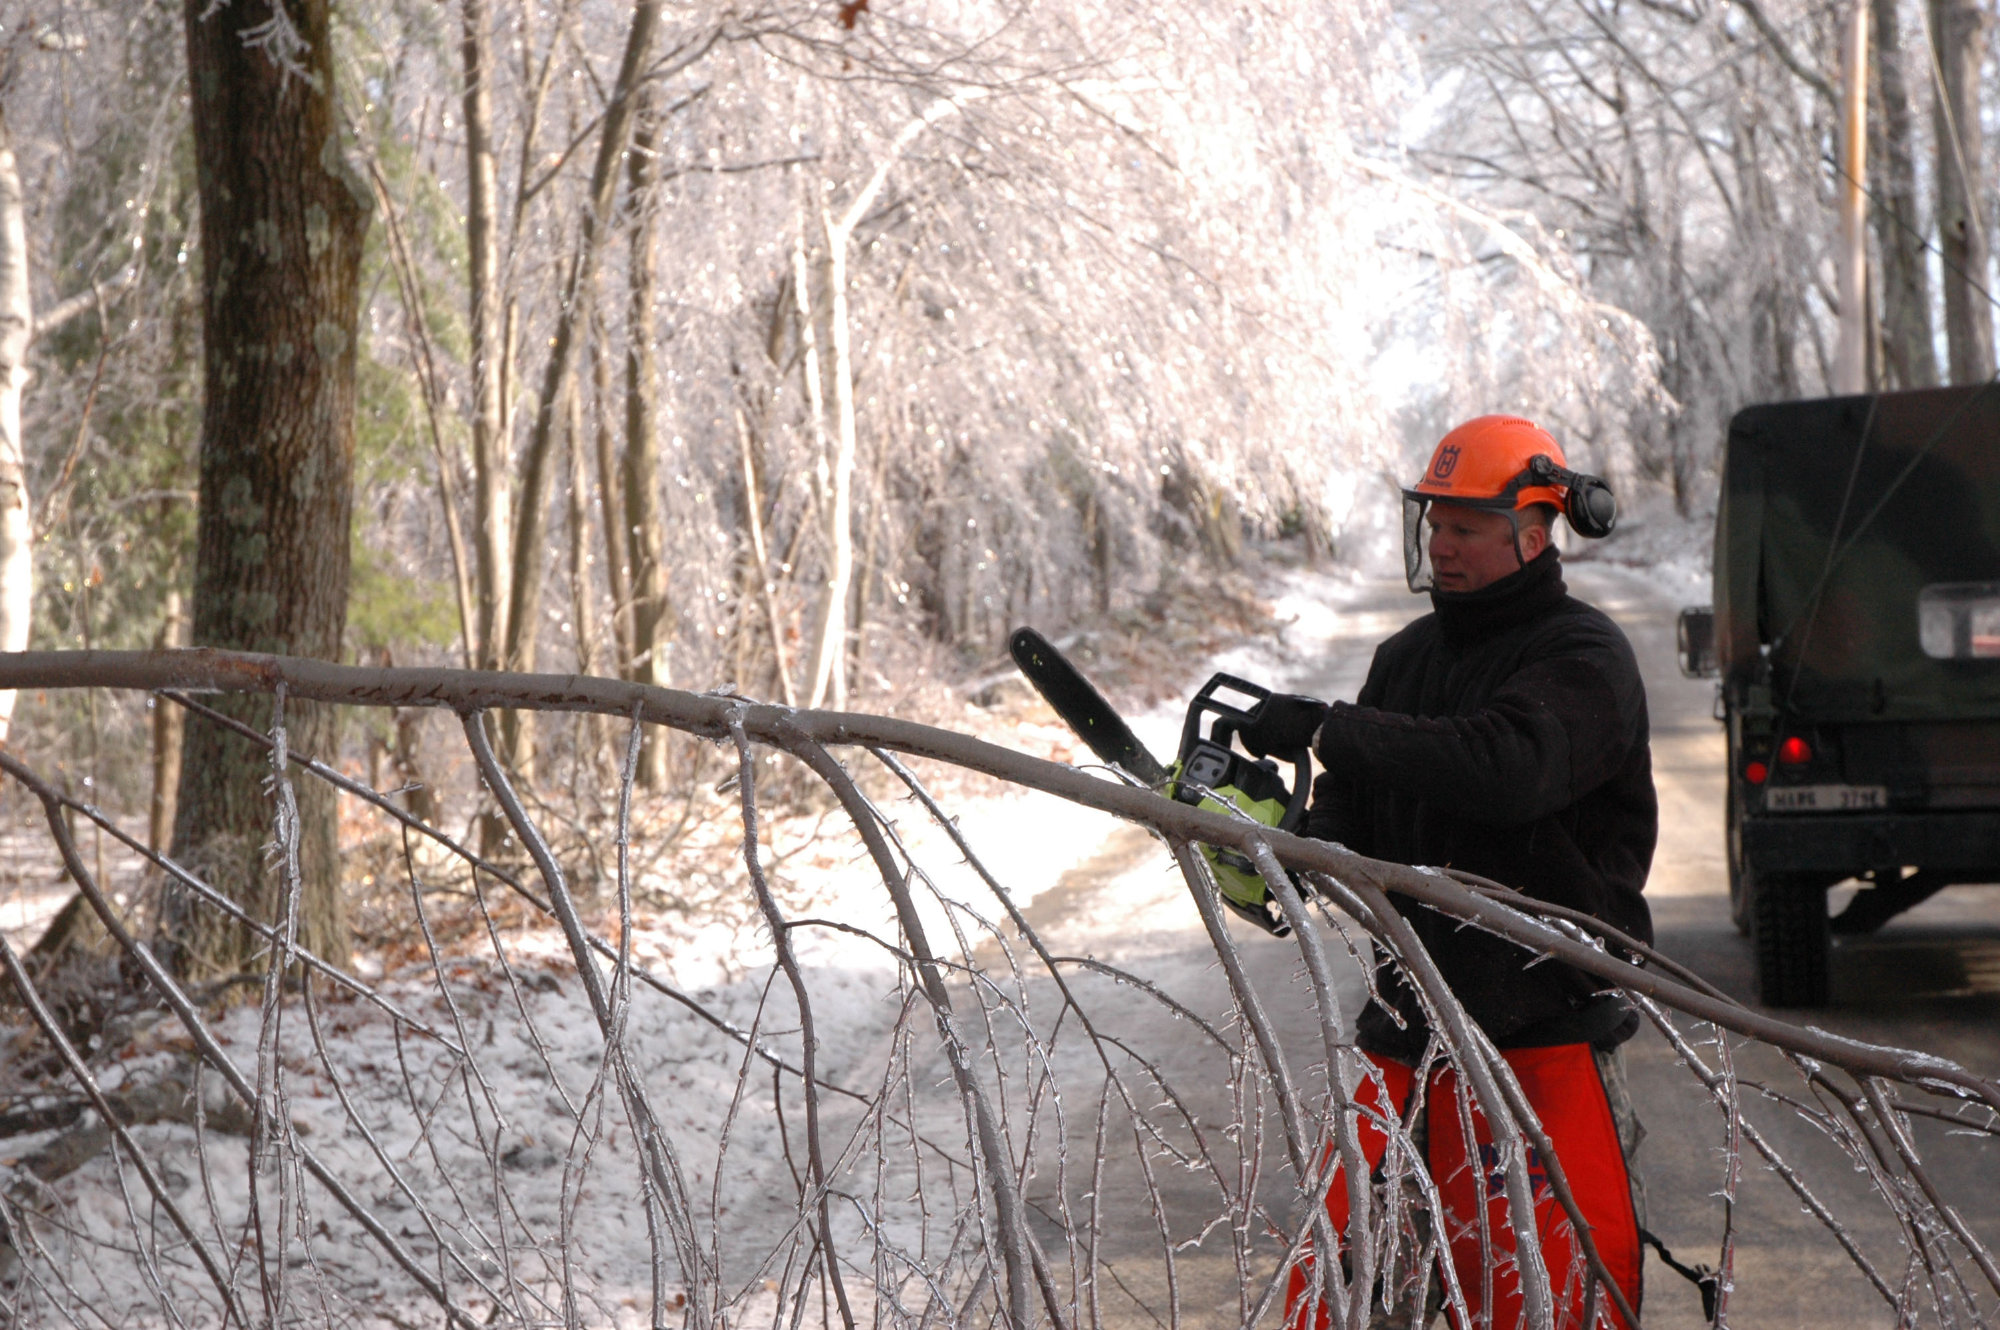 National Guard member cuts icy tree limb following a winter storm.